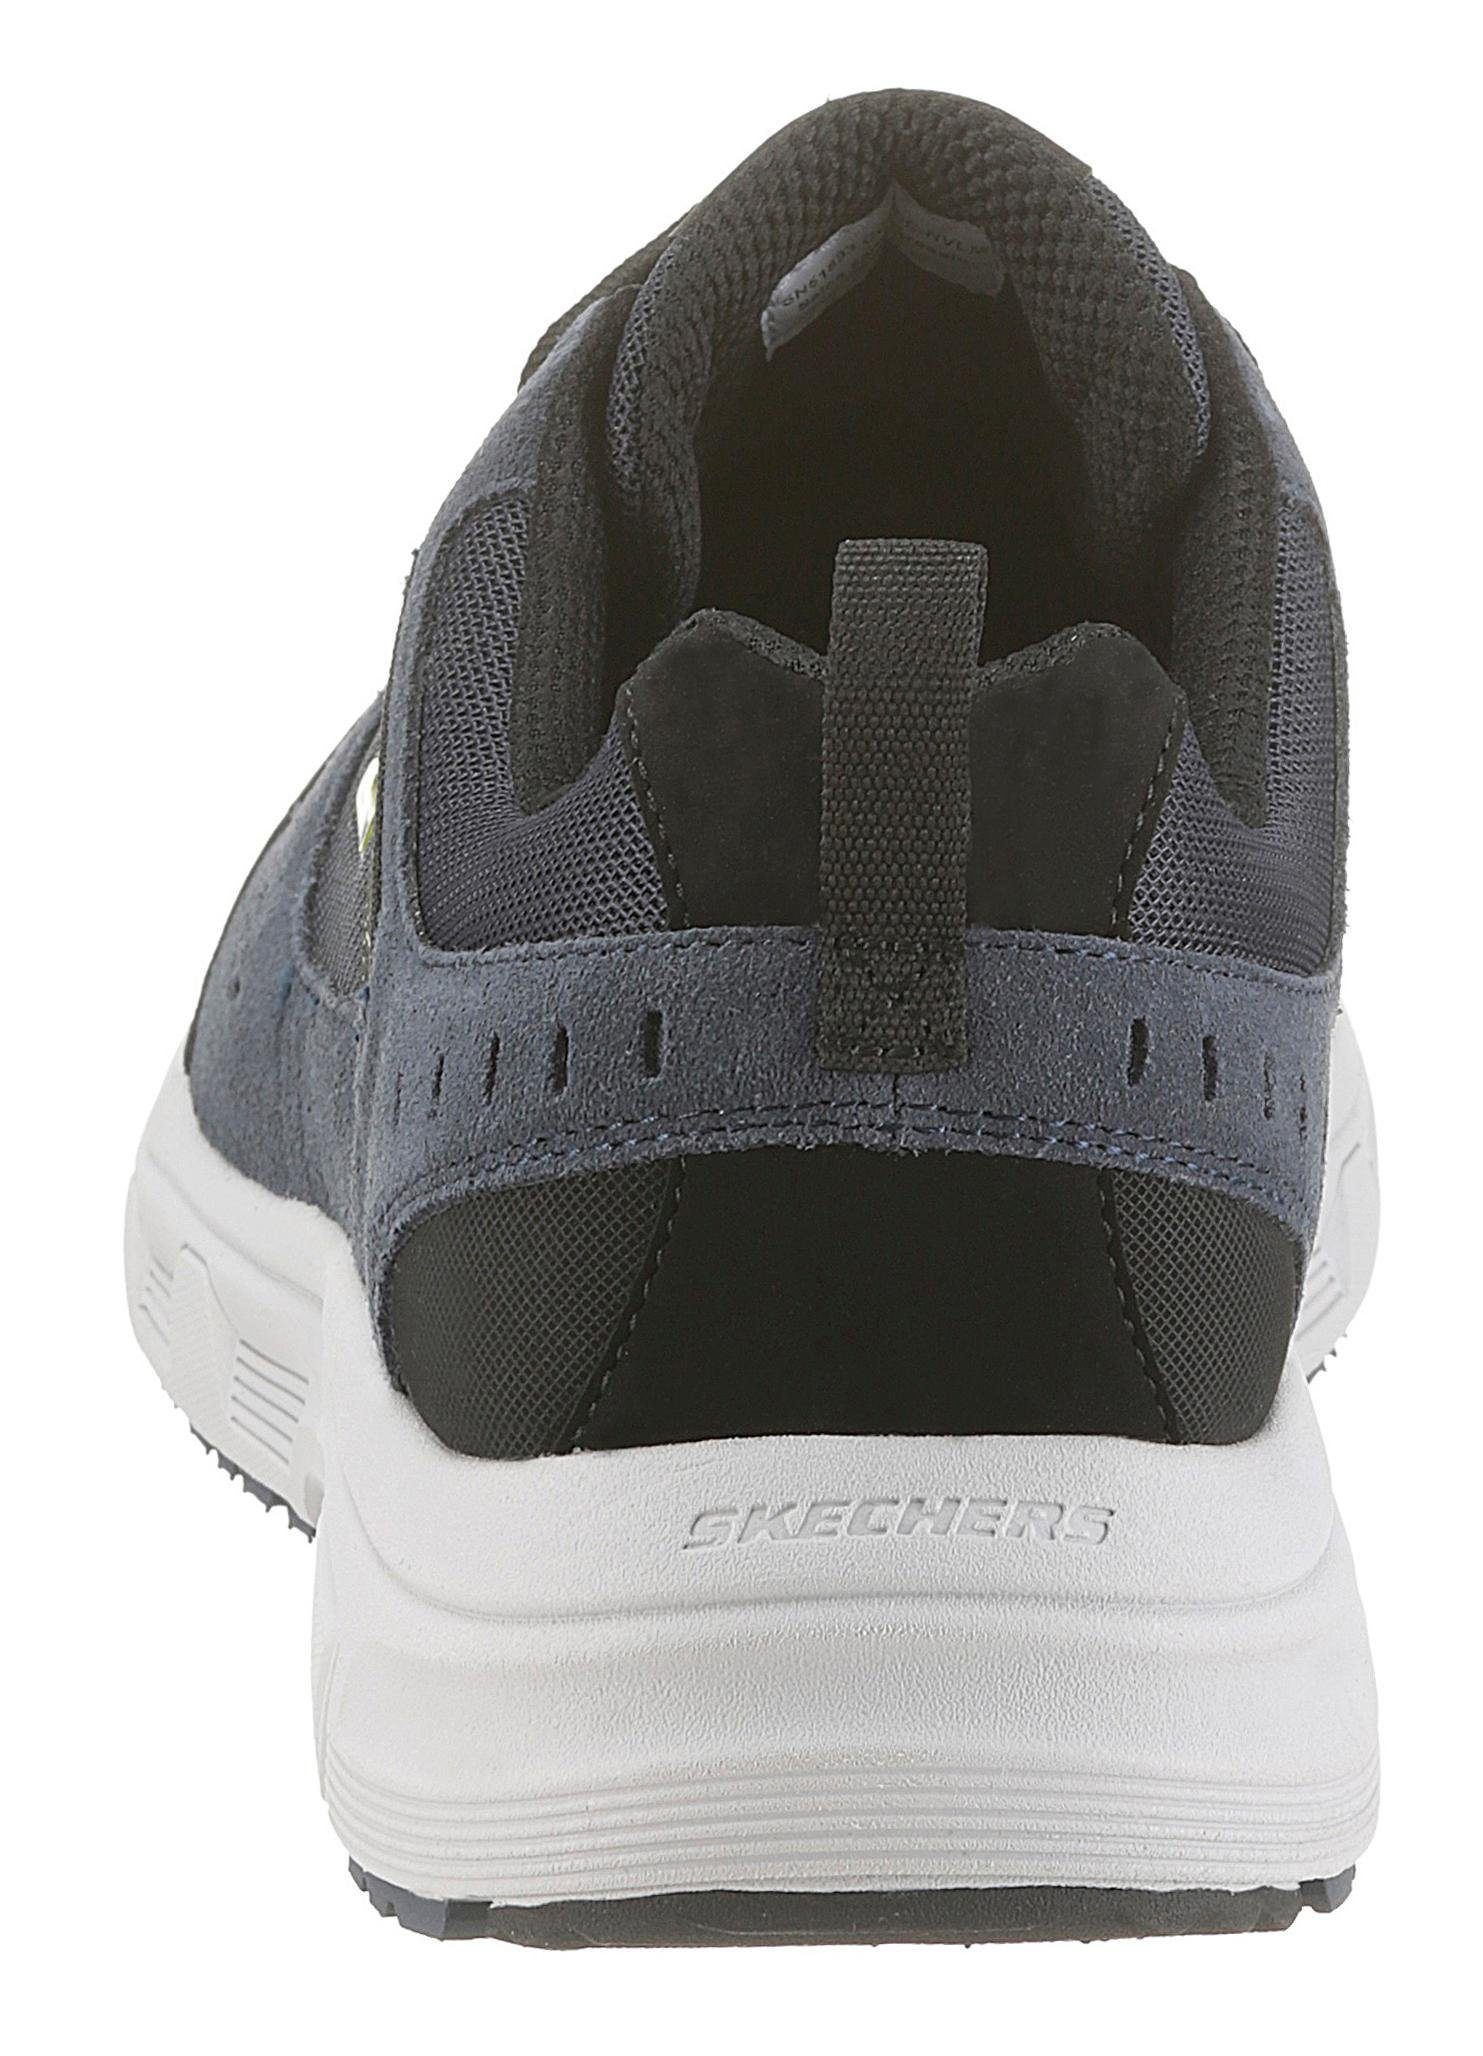 Skechers Oak Canyon schwarz bequemer mit Sneaker Memory Foam-Ausstattung navy